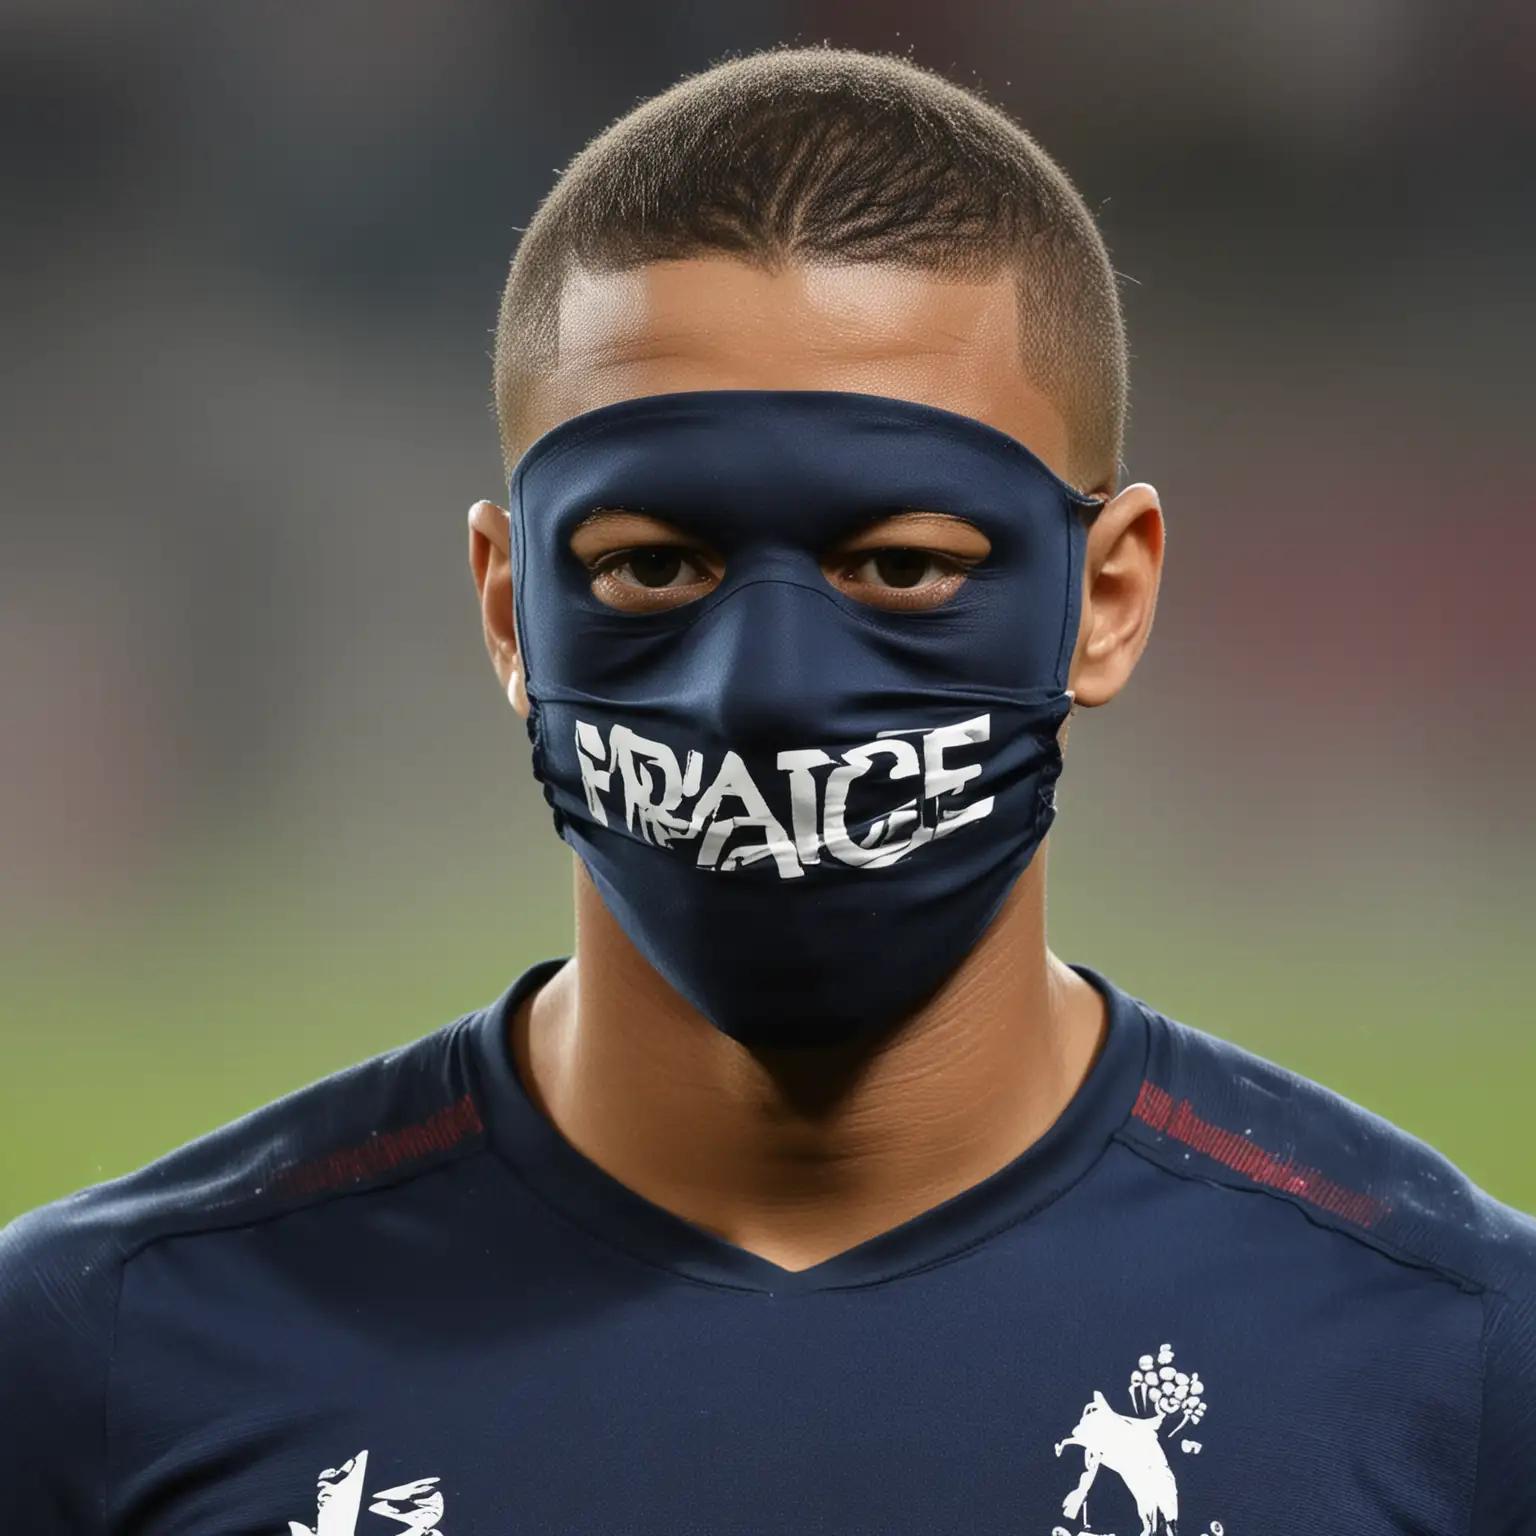 France team Mbappe wearing a mask